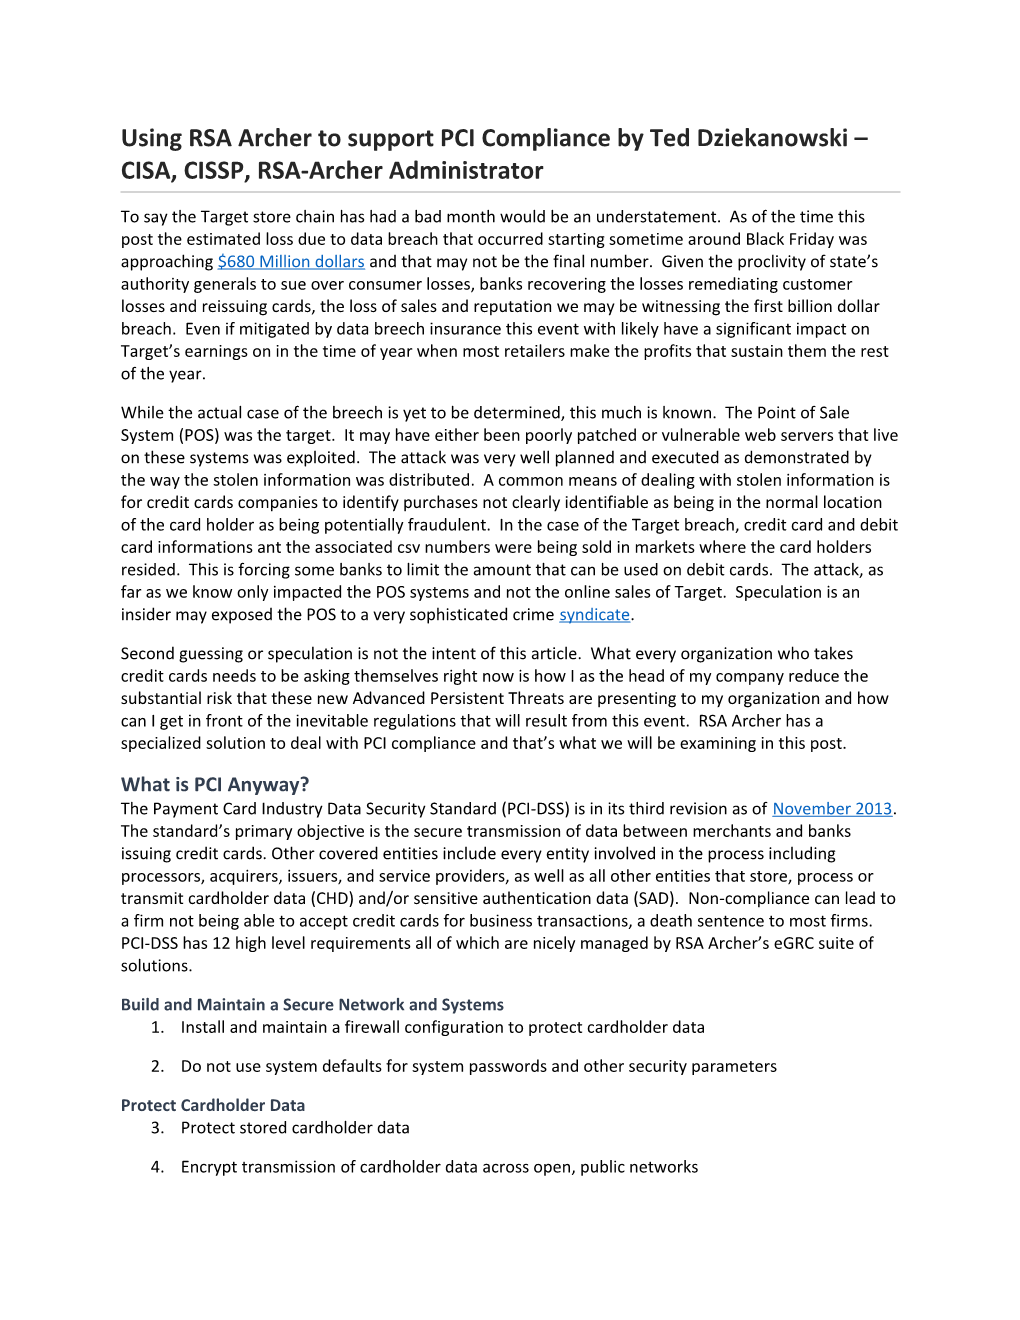 Using RSA Archer to Support PCI Compliance by Ted Dziekanowski CISA, CISSP, RSA-Archer